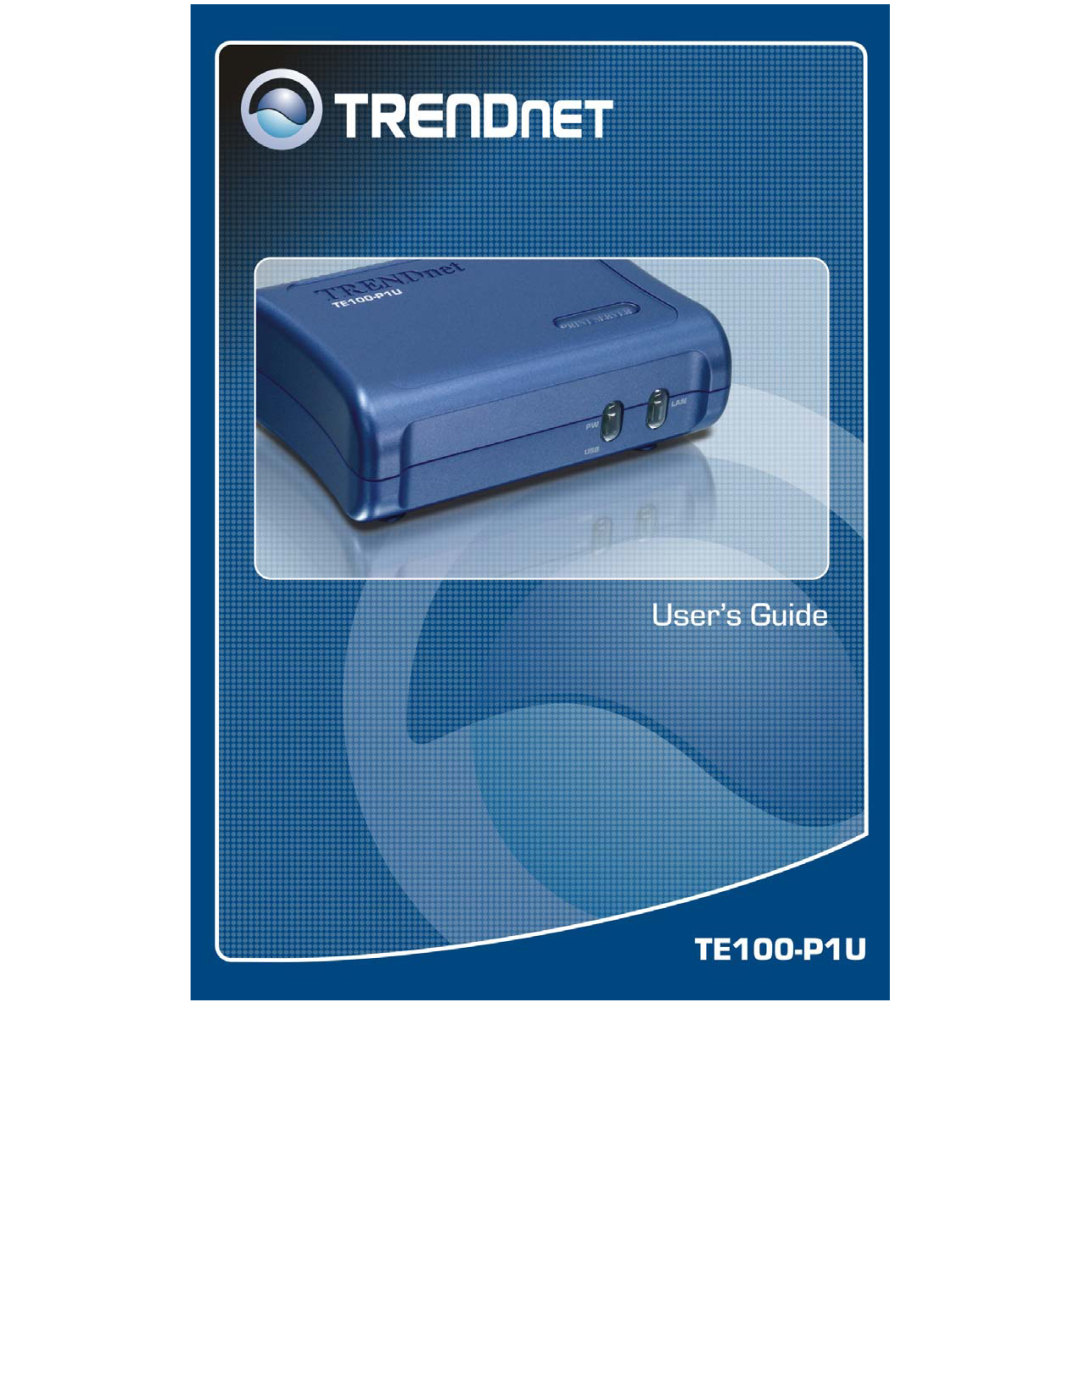 TRENDnet Print Server manual Quick Installation Guide, TE100-P1U 